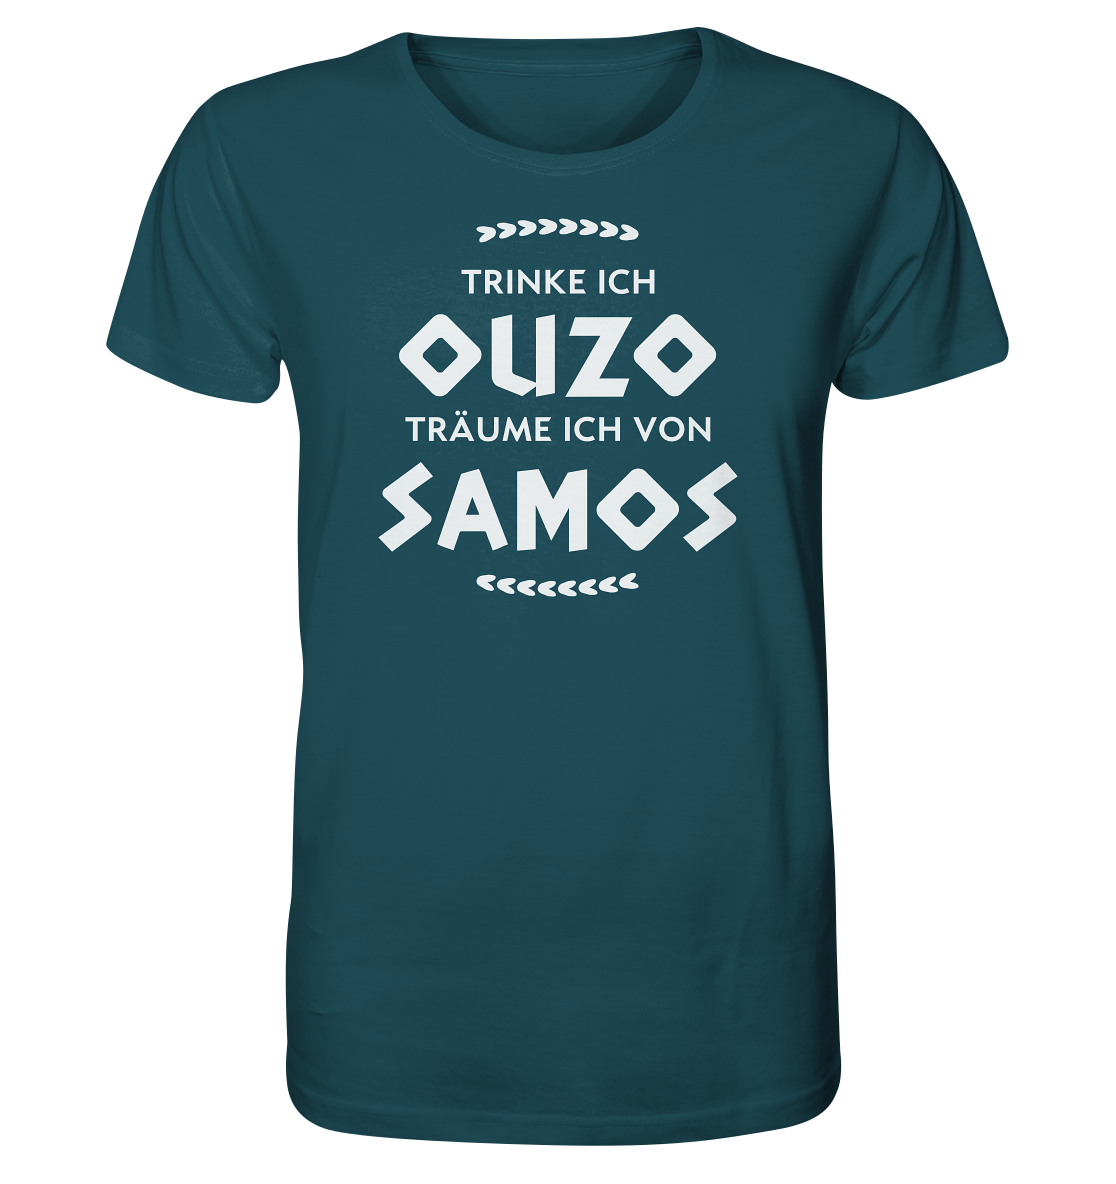 If I drink Ouzo I dream of Samos - Organic Shirt